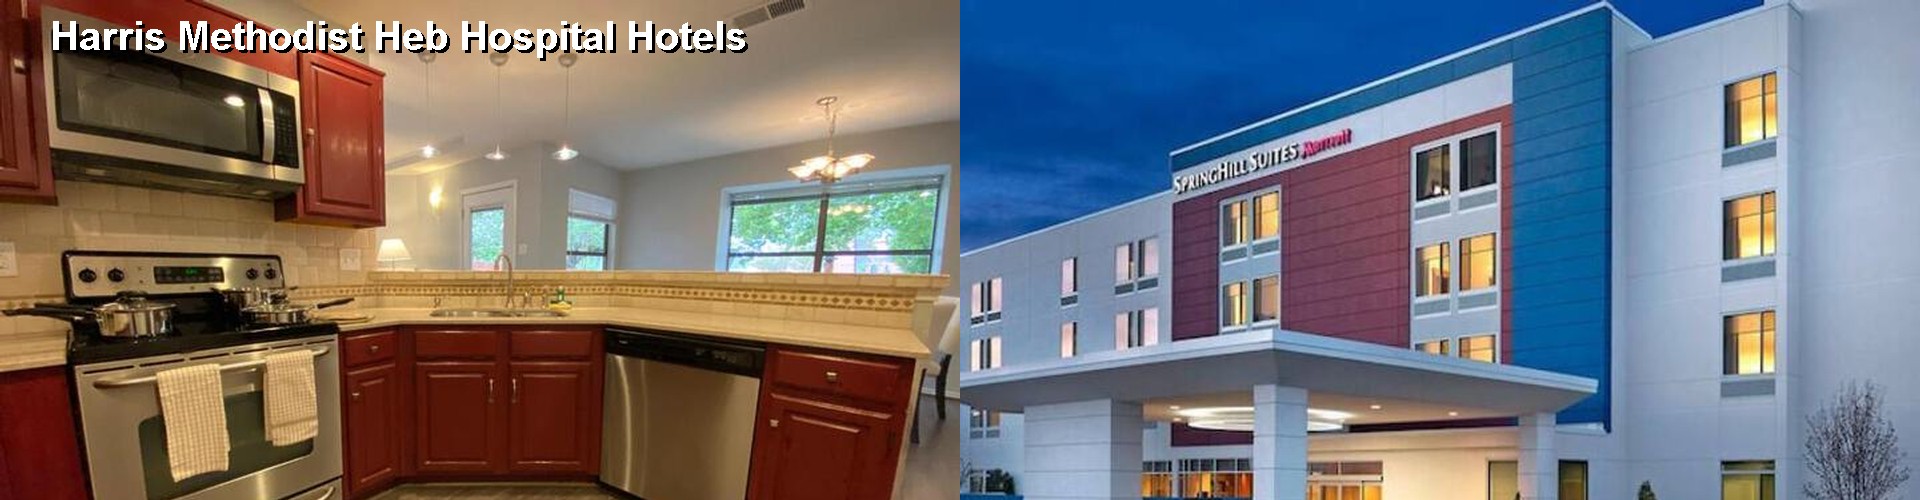 4 Best Hotels near Harris Methodist Heb Hospital